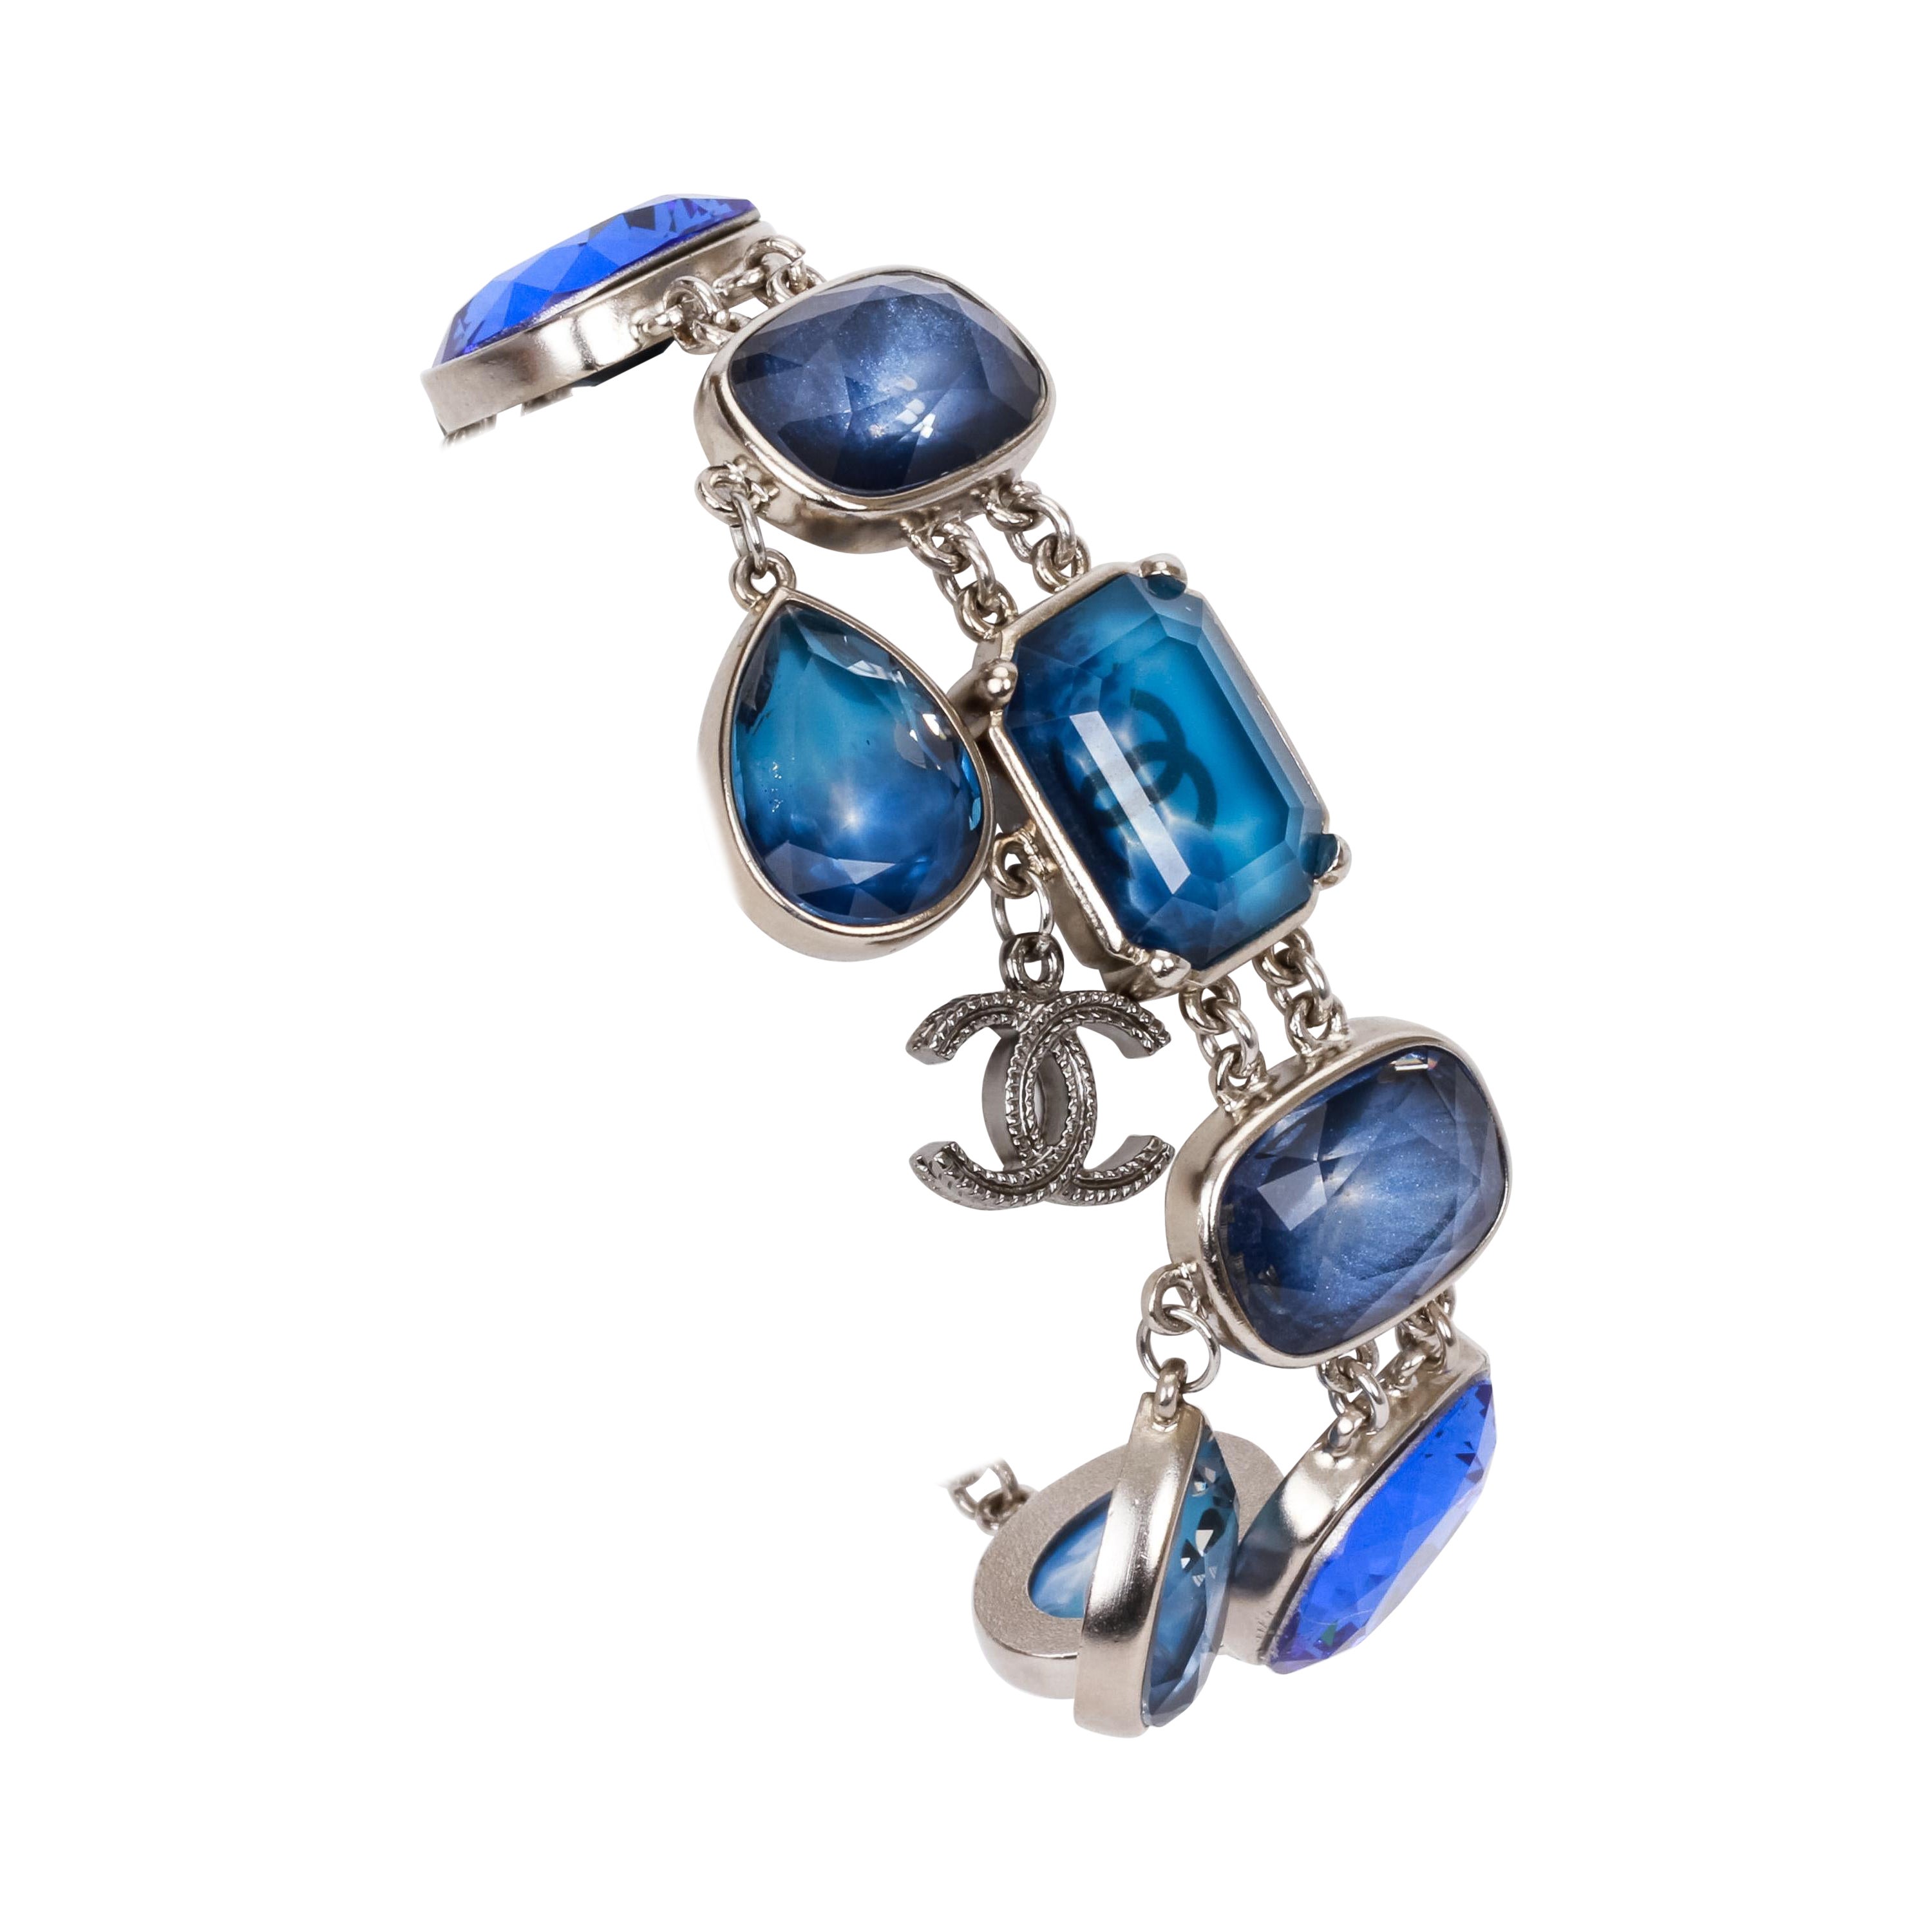 Chanel Blue Stone Charm Bracelet